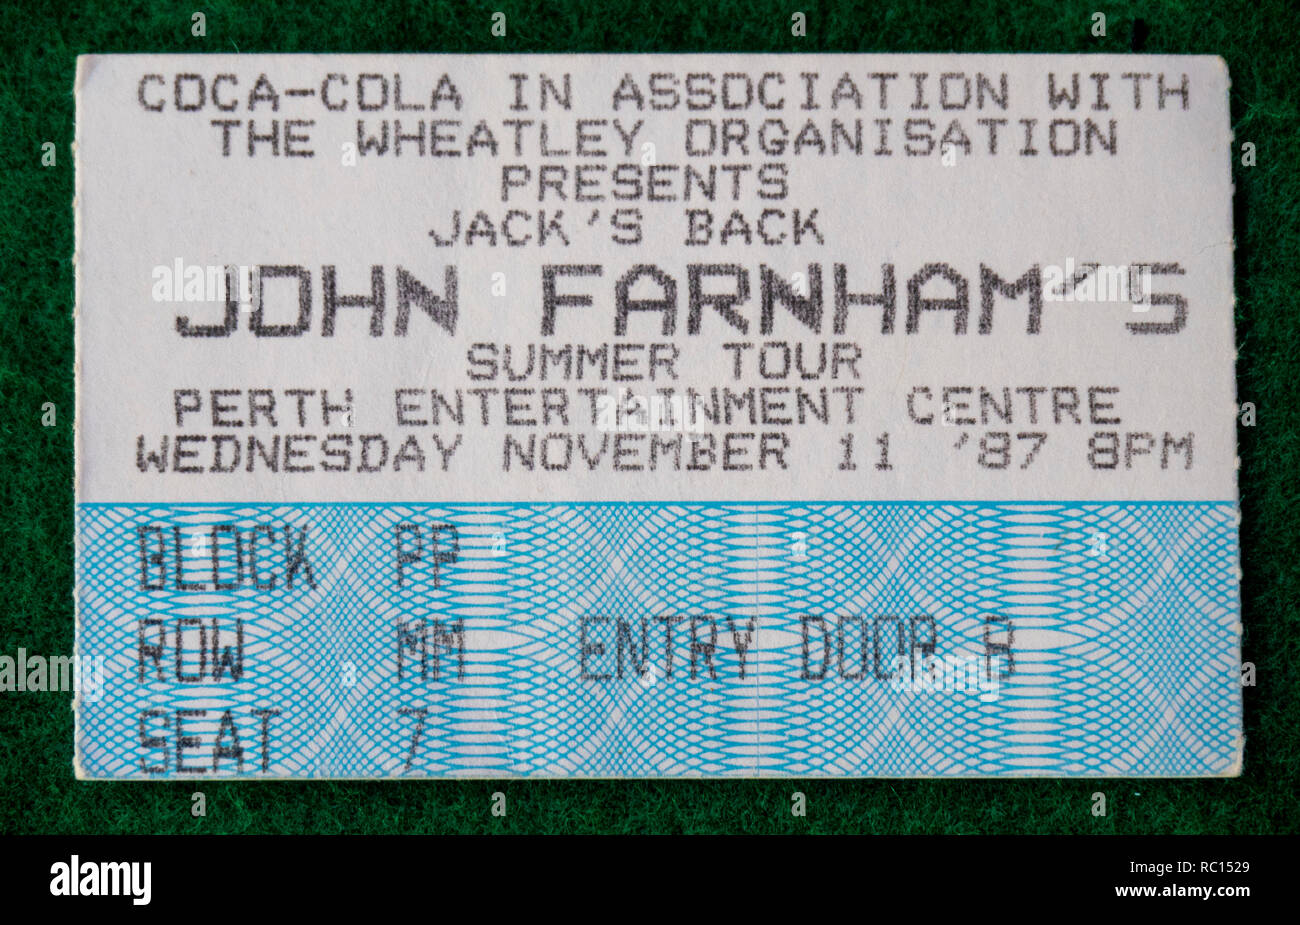 Ticket for John Farnham concert at Perth Entertainment Centre in 1987 A Australia. Stock Photo